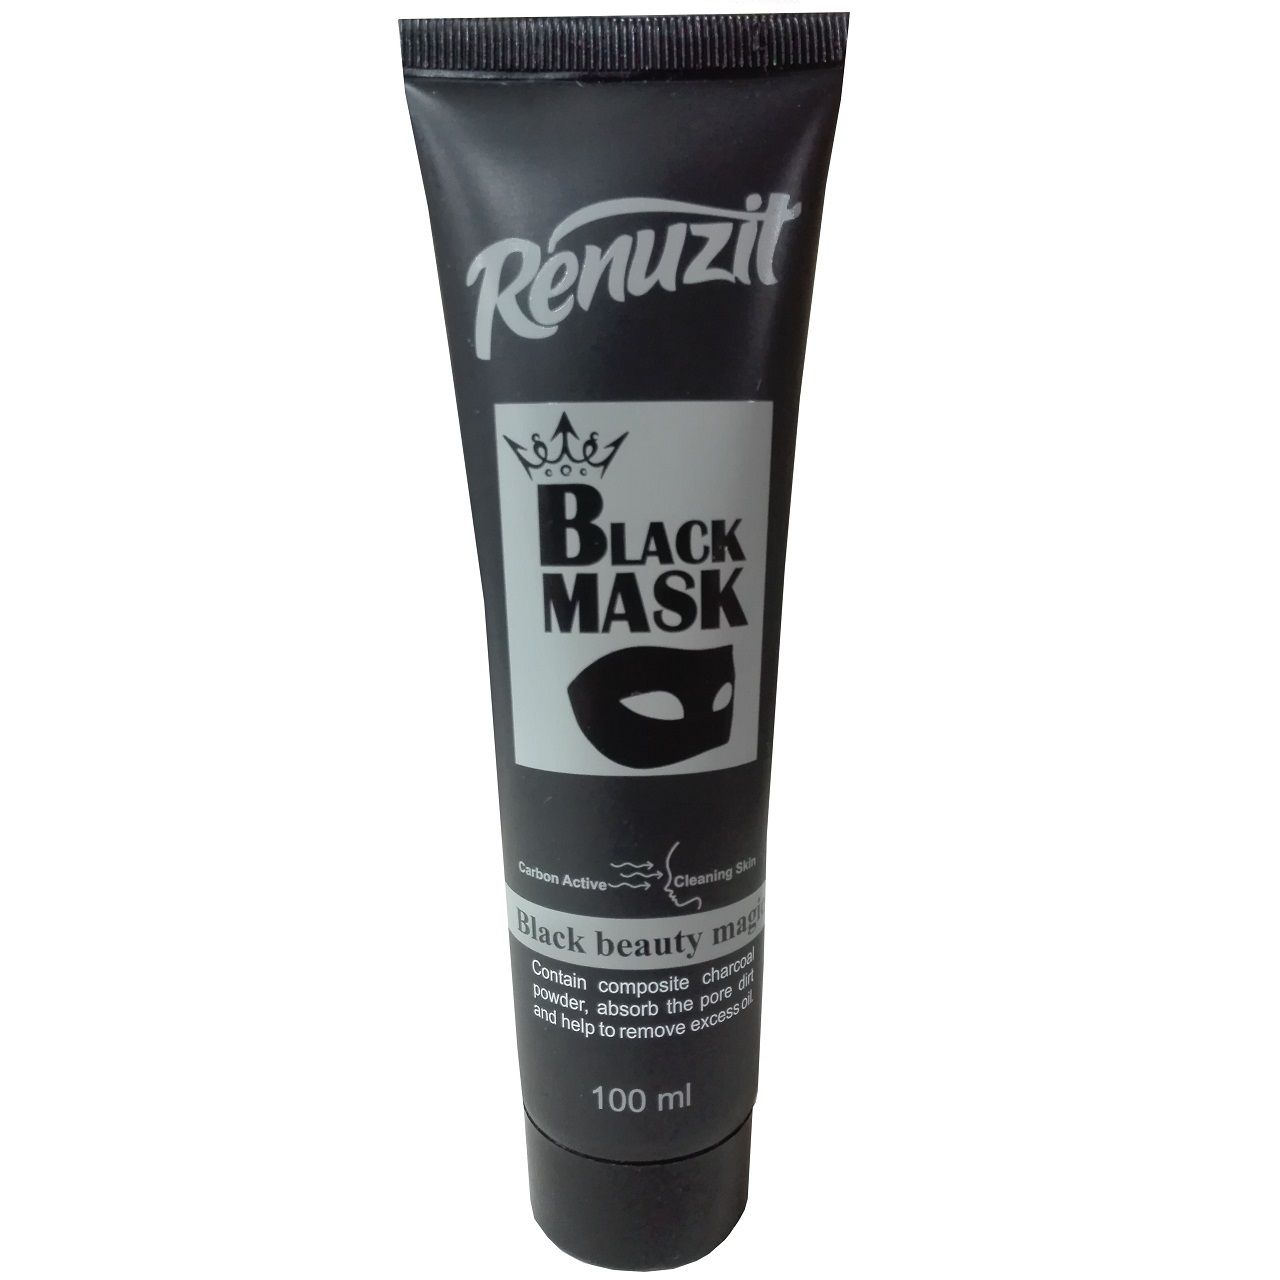 ماسک صورت رینوزیت مدل Black mask carbon active حجم 100 میلی لیتر -  - 1